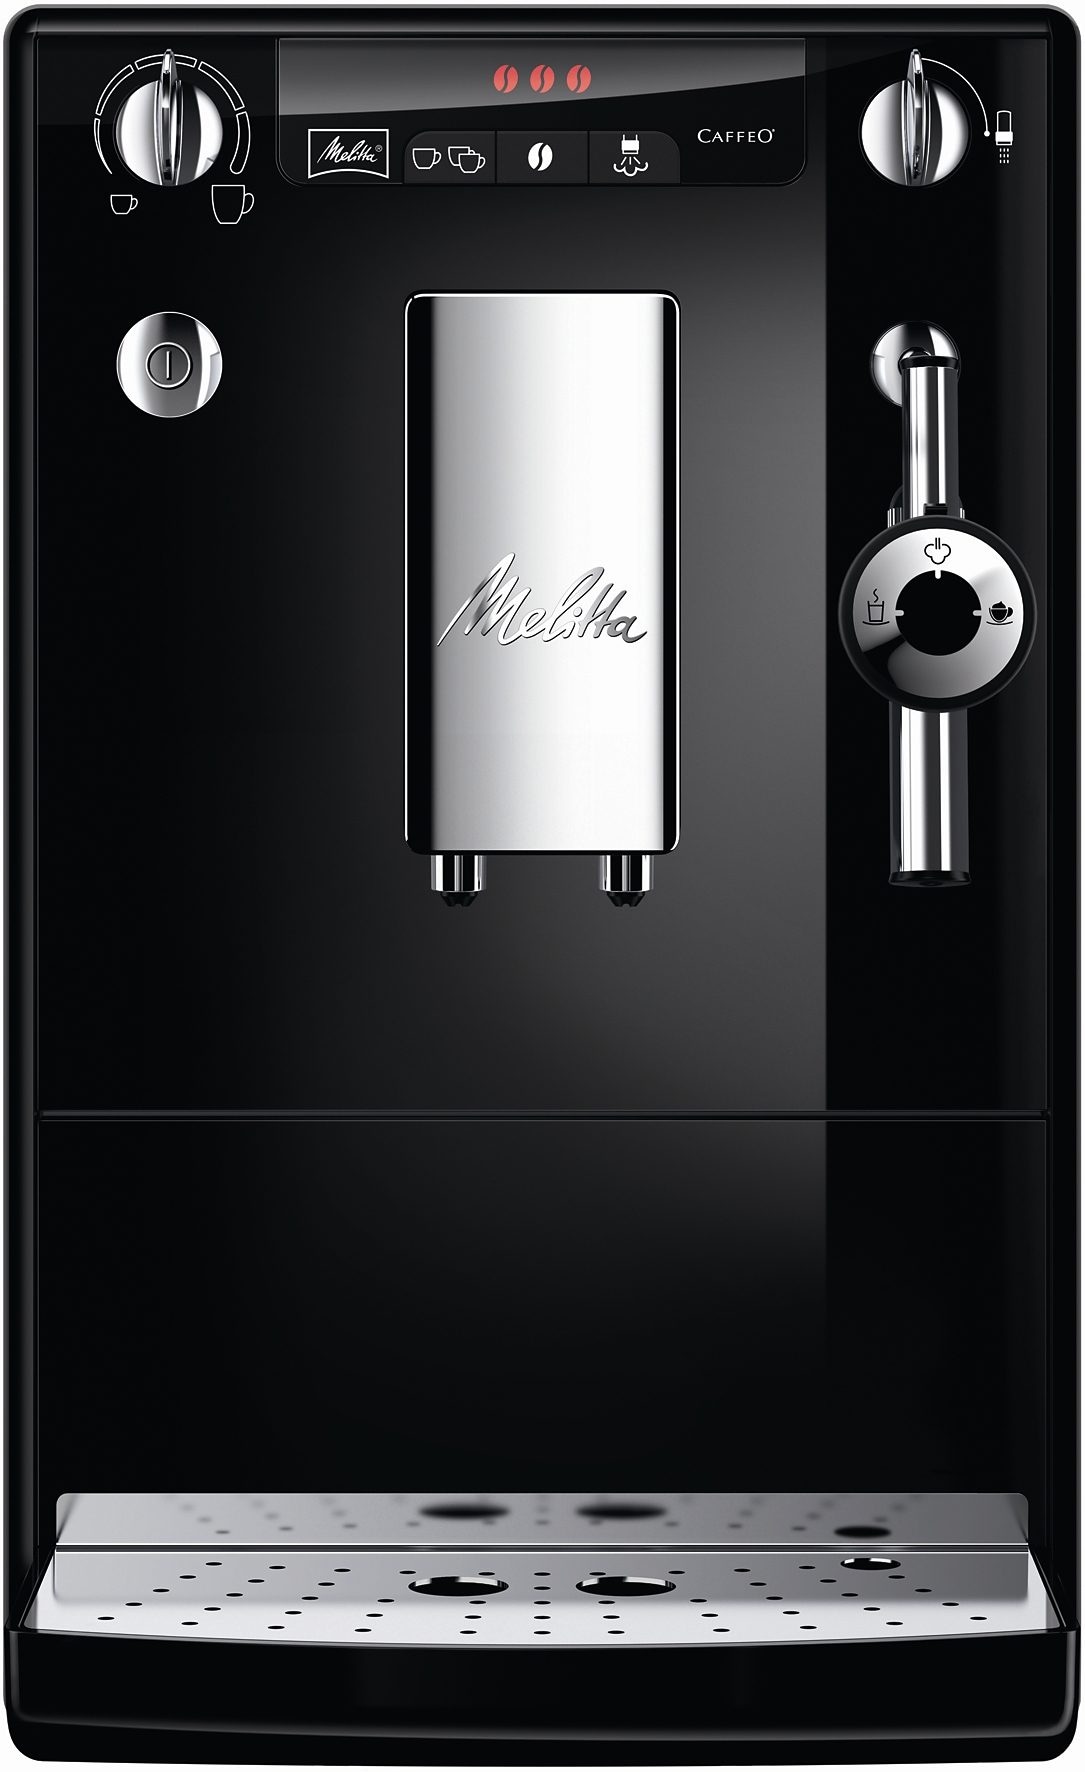 Melitta Kaffeevollautomat »Solo® & Perfect Milk E 957-201, schwarz«, Café crème&Espresso per One Touch, Milchsch&heiße Milch per Drehregler